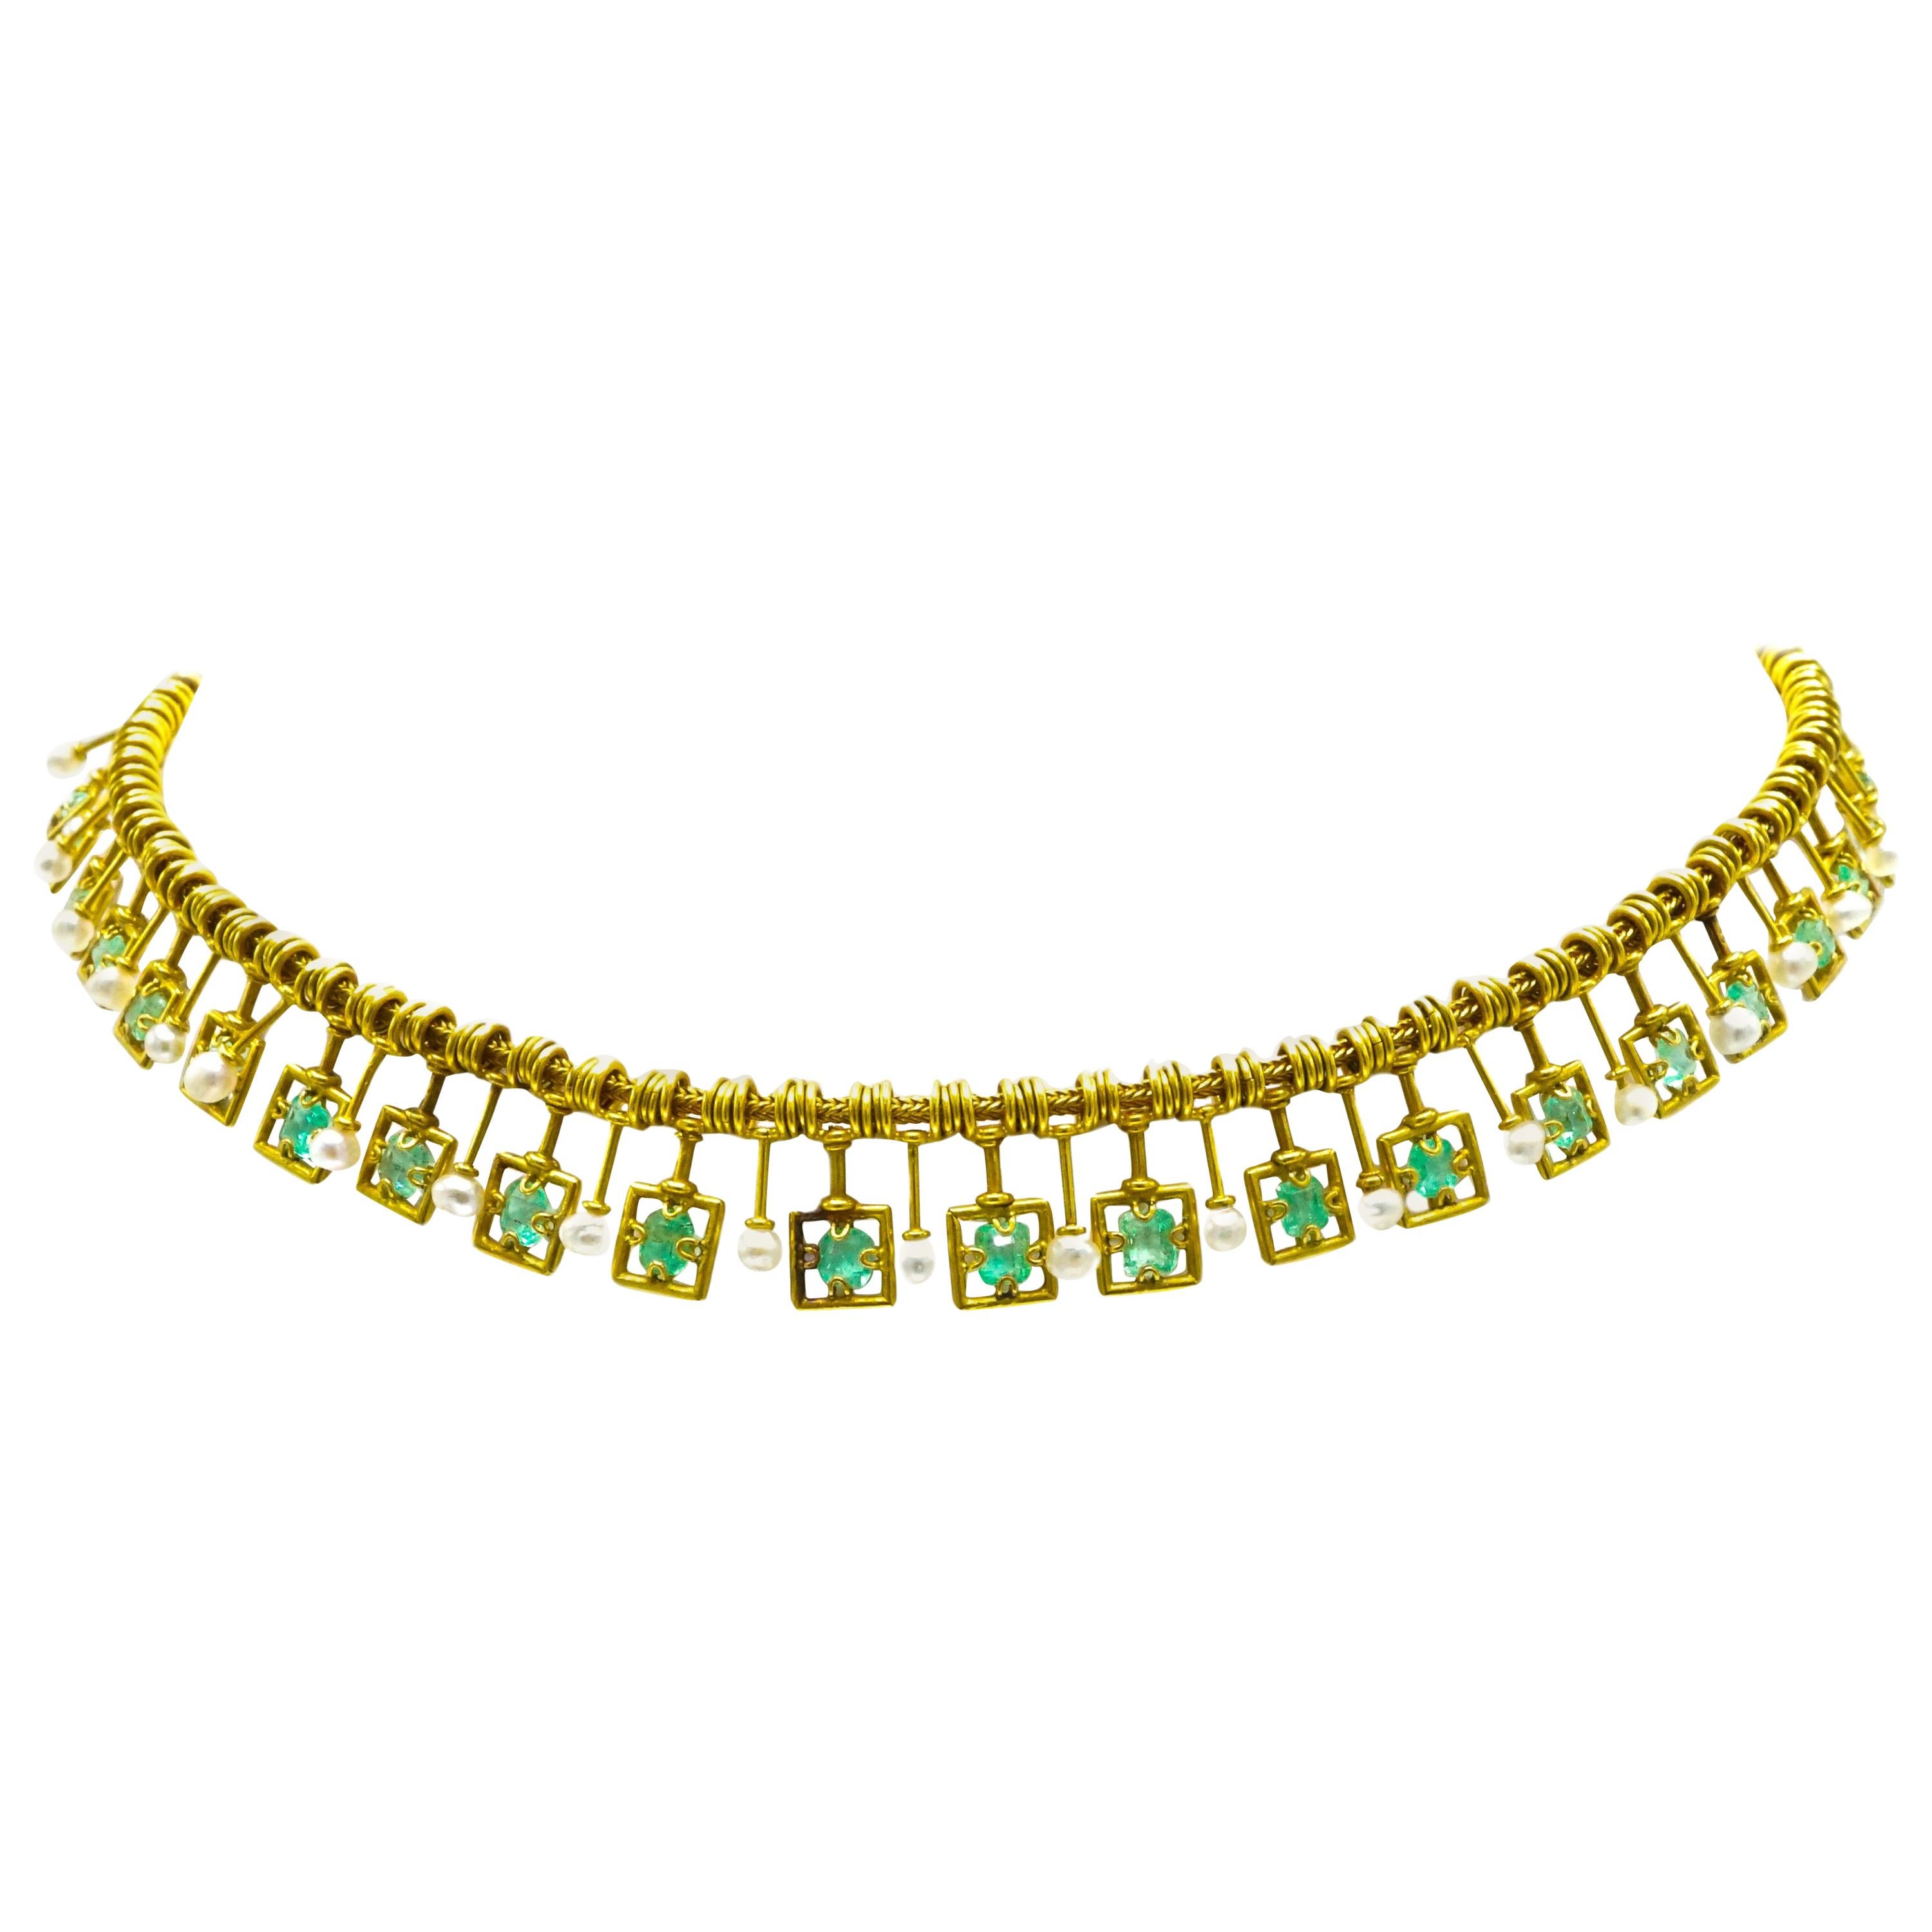  Castellani 18 Karat Emerald, Pearl, and Gold Necklace